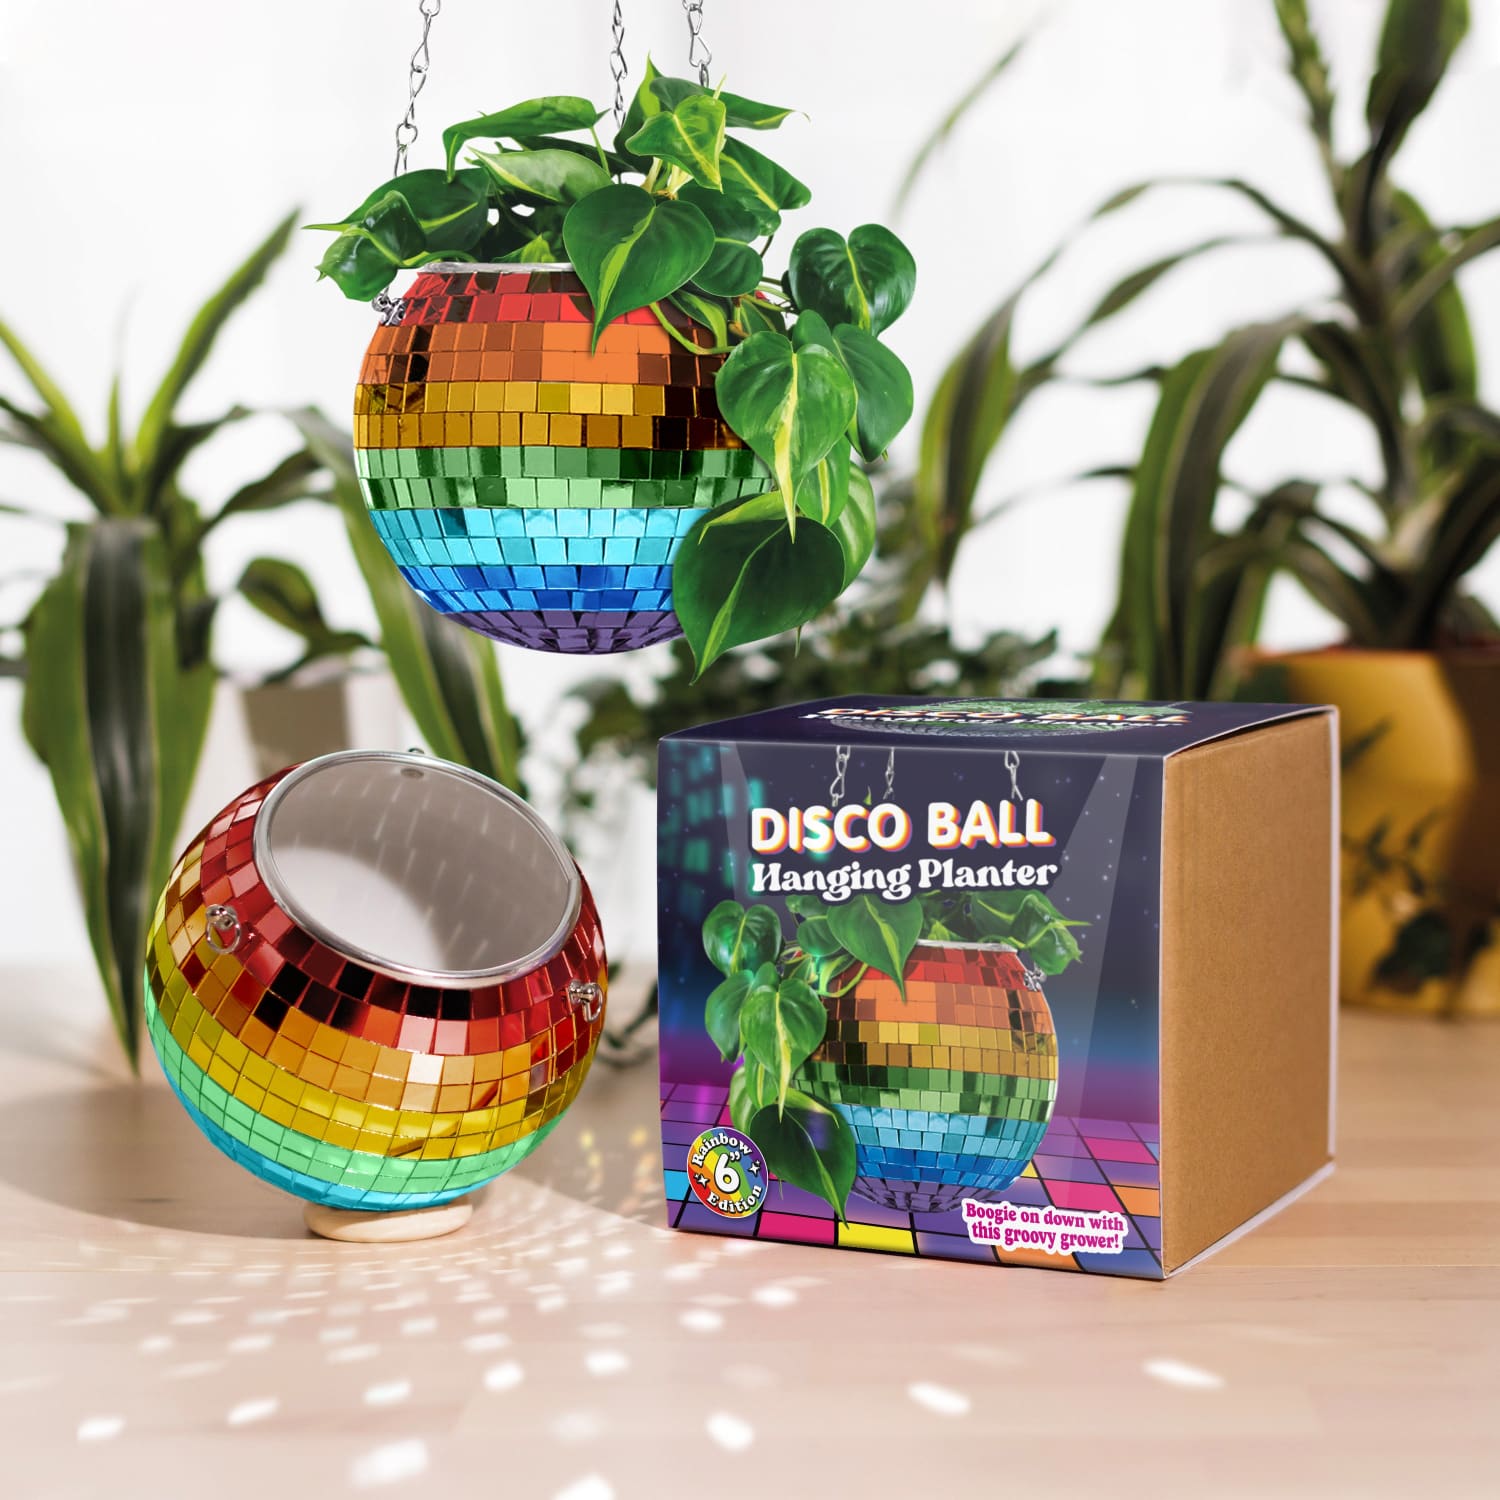 Disco Ball Planter Rainbow 8 0923 - Q323